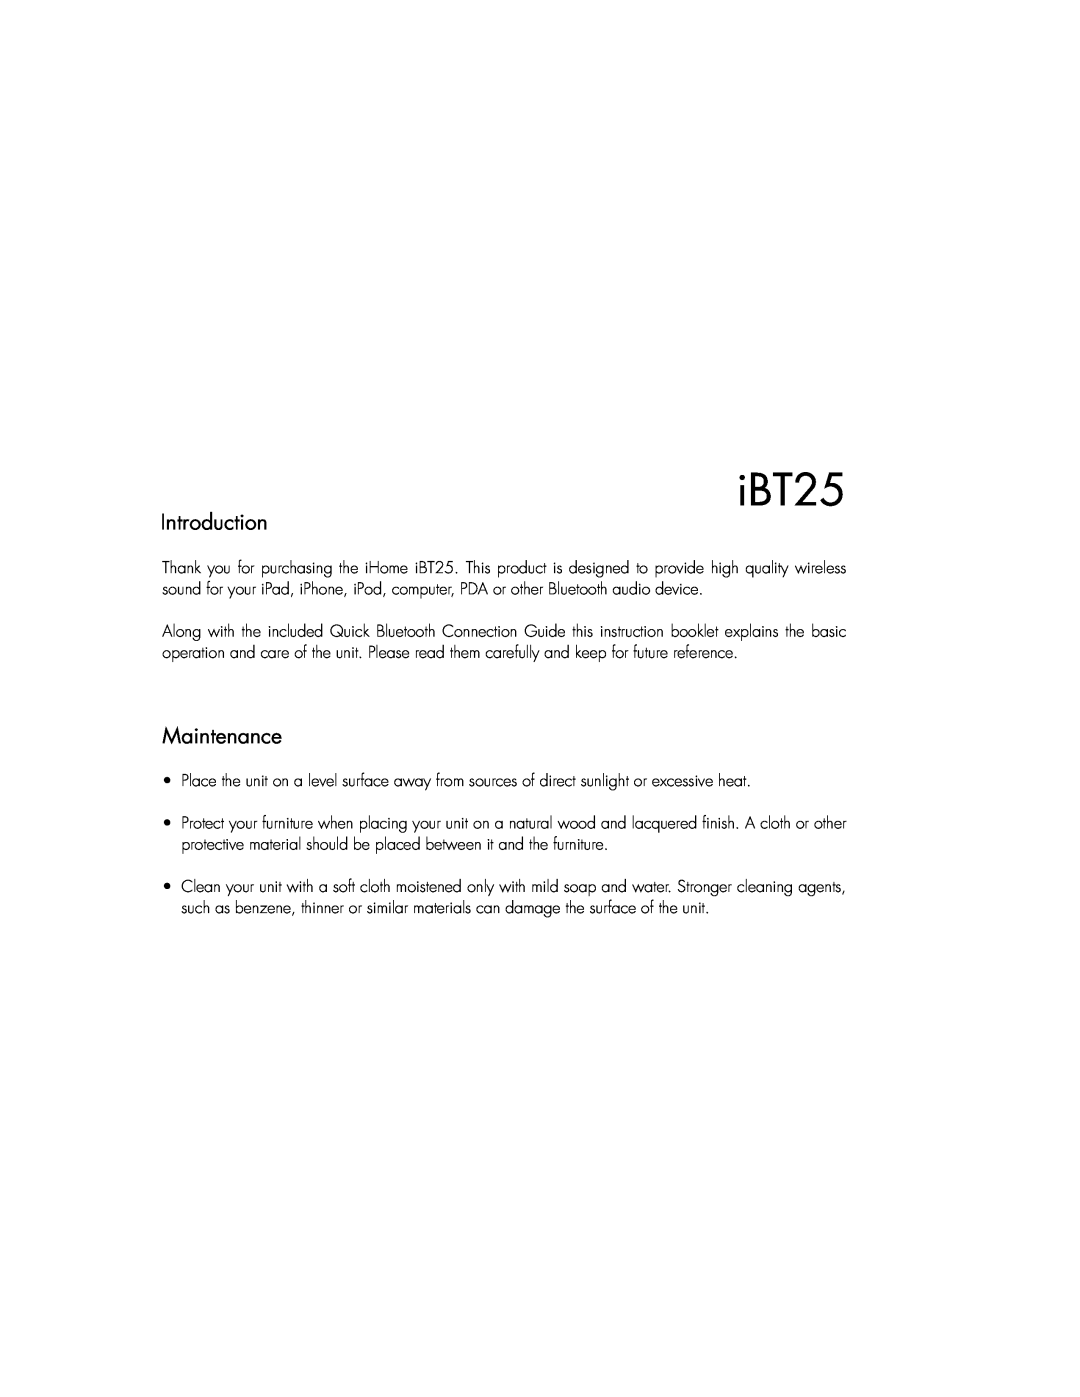 iHome IBT25BC instruction manual iBT25, Introduction, Maintenance 